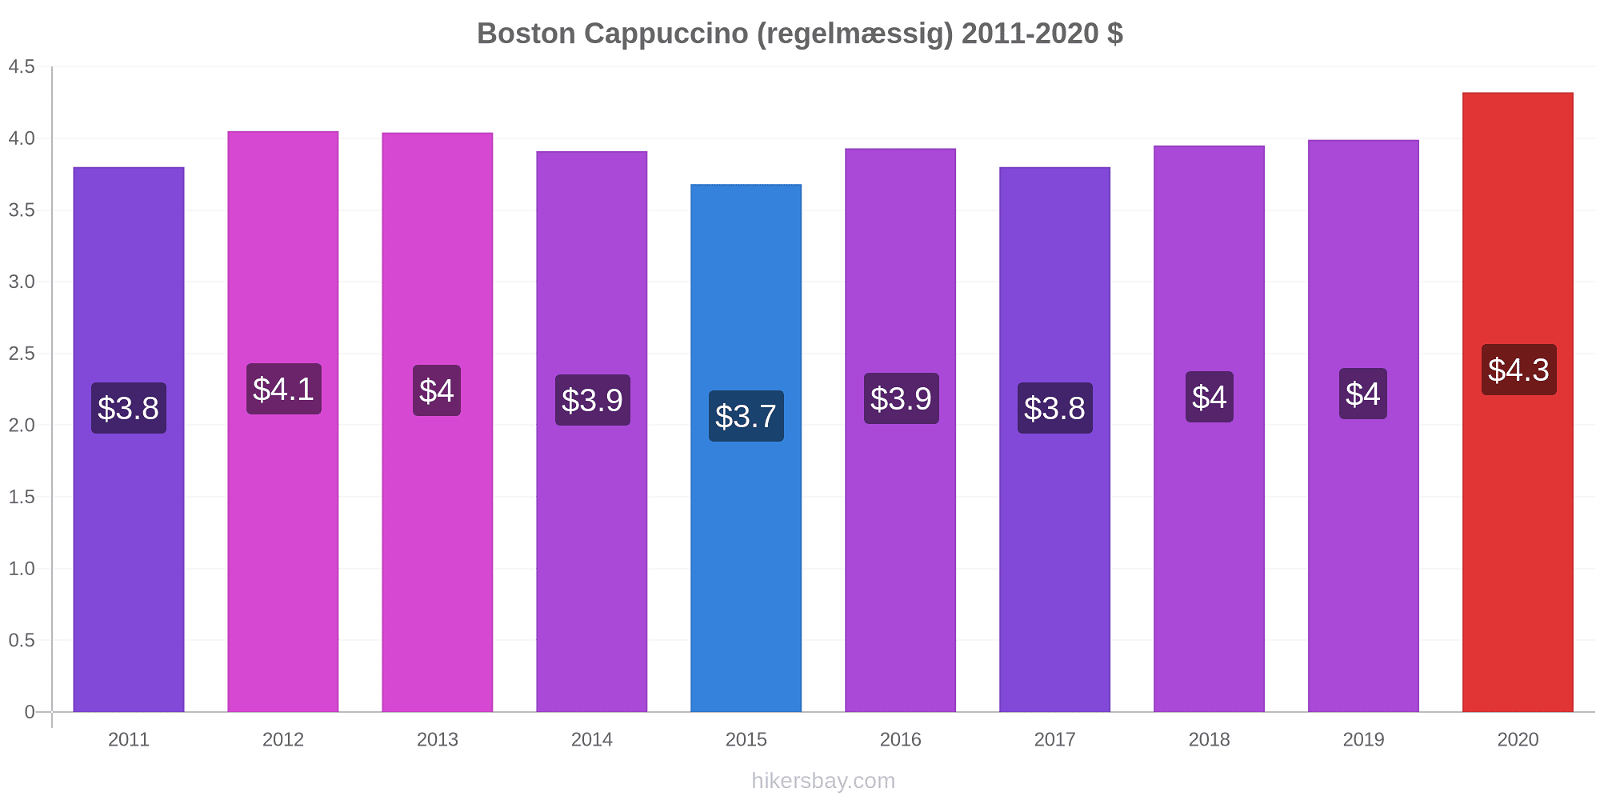 Boston prisændringer Cappuccino (regelmæssig) hikersbay.com